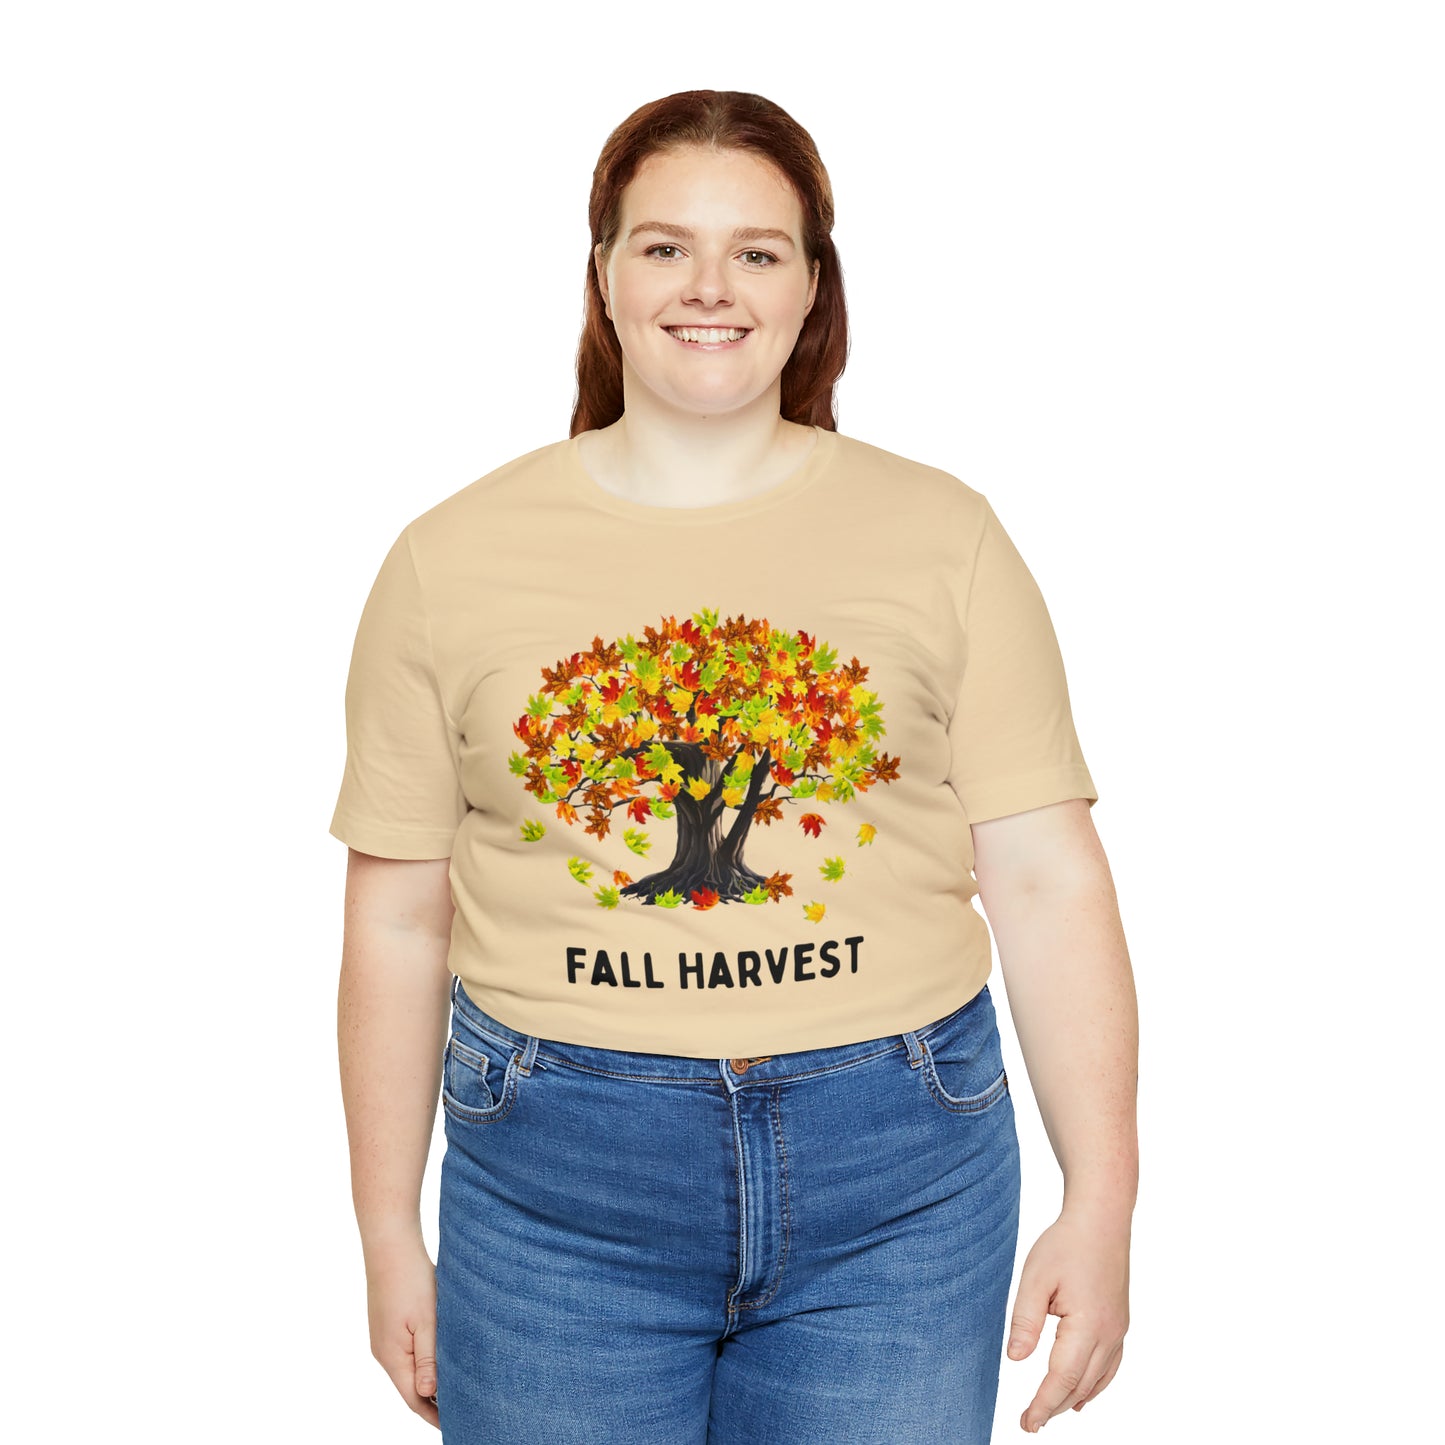 Fall Harvest Unisex Jersey Short Sleeve Tee